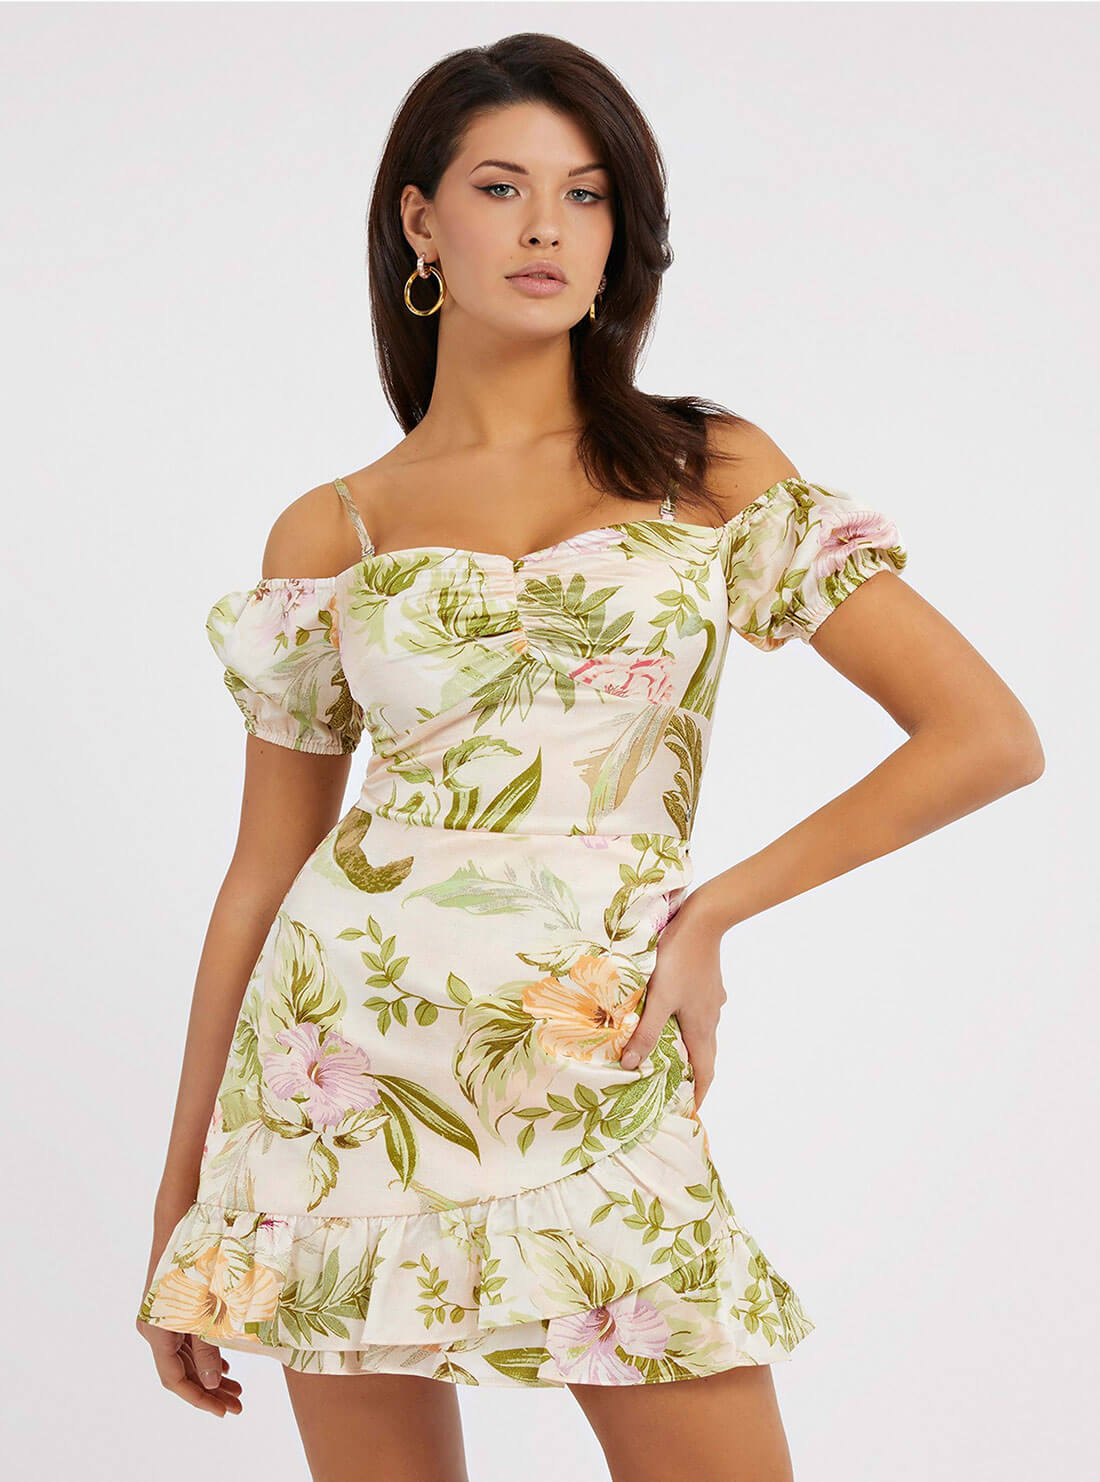 Eco Hibiscus Alva Mini Dress | GUESS Women's Apparel | front view